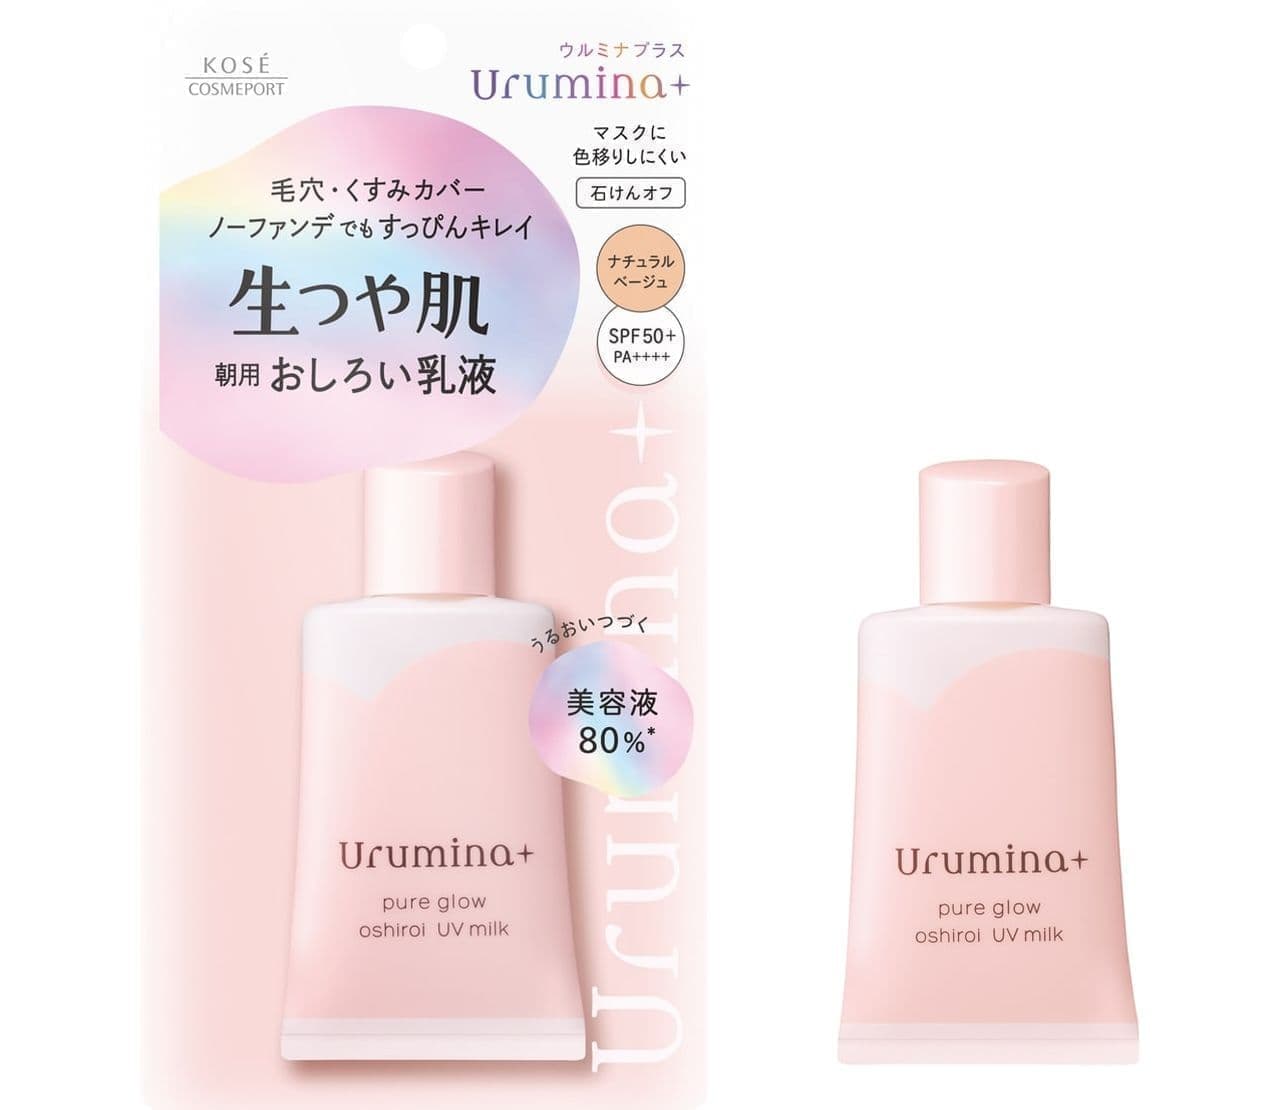 Ulmina Plus "Fresh Glossy Skin White Milky Lotion